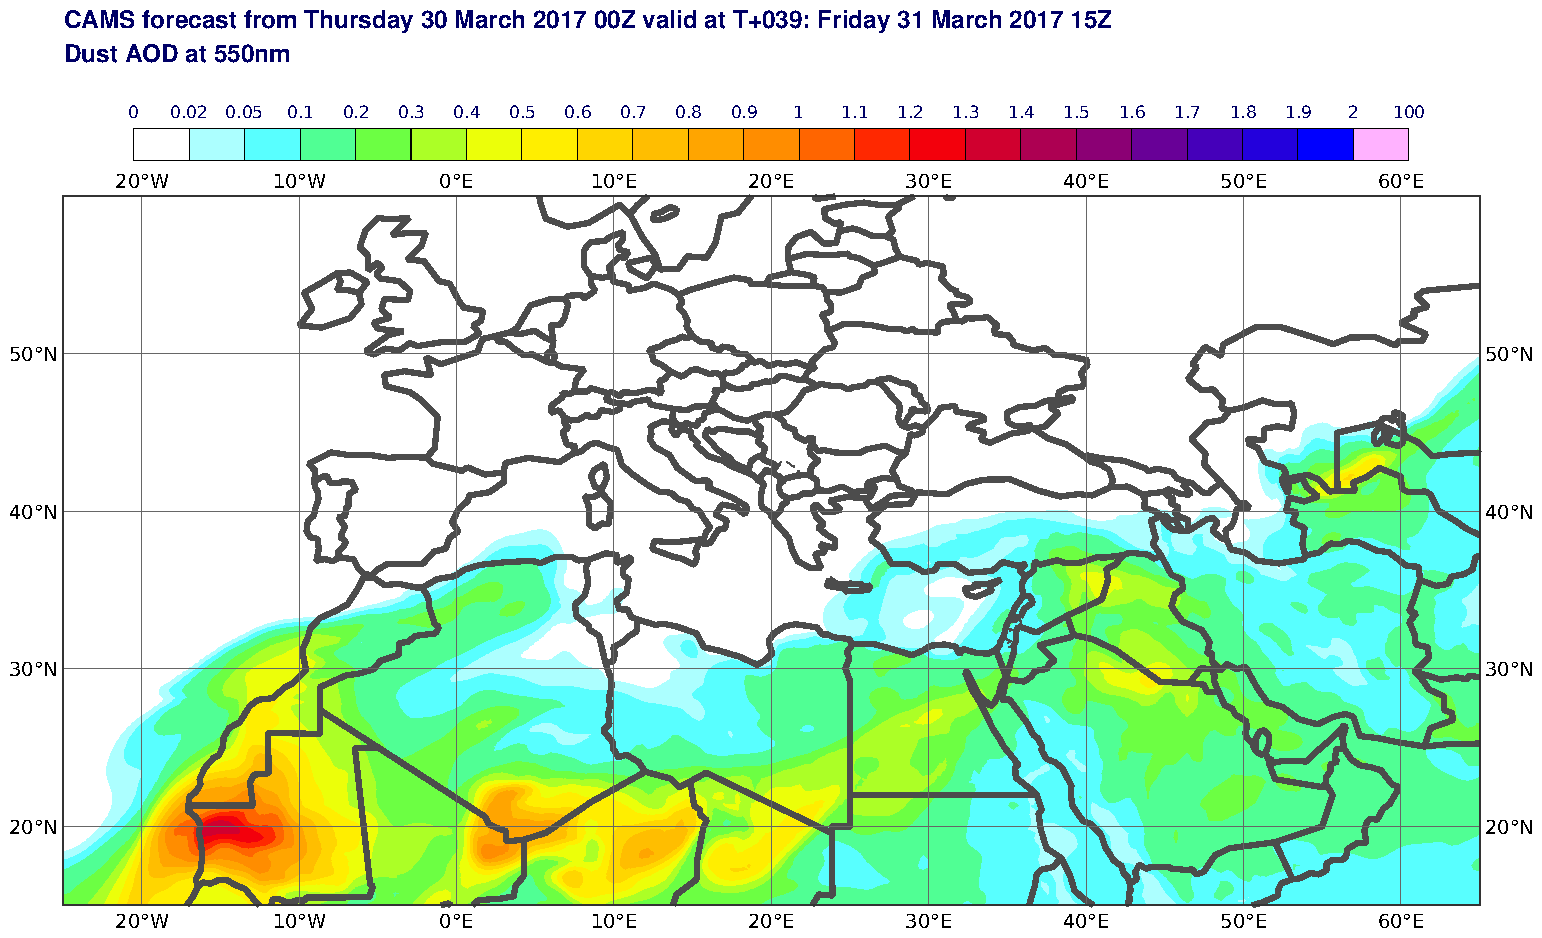 Dust AOD at 550nm valid at T39 - 2017-03-31 15:00